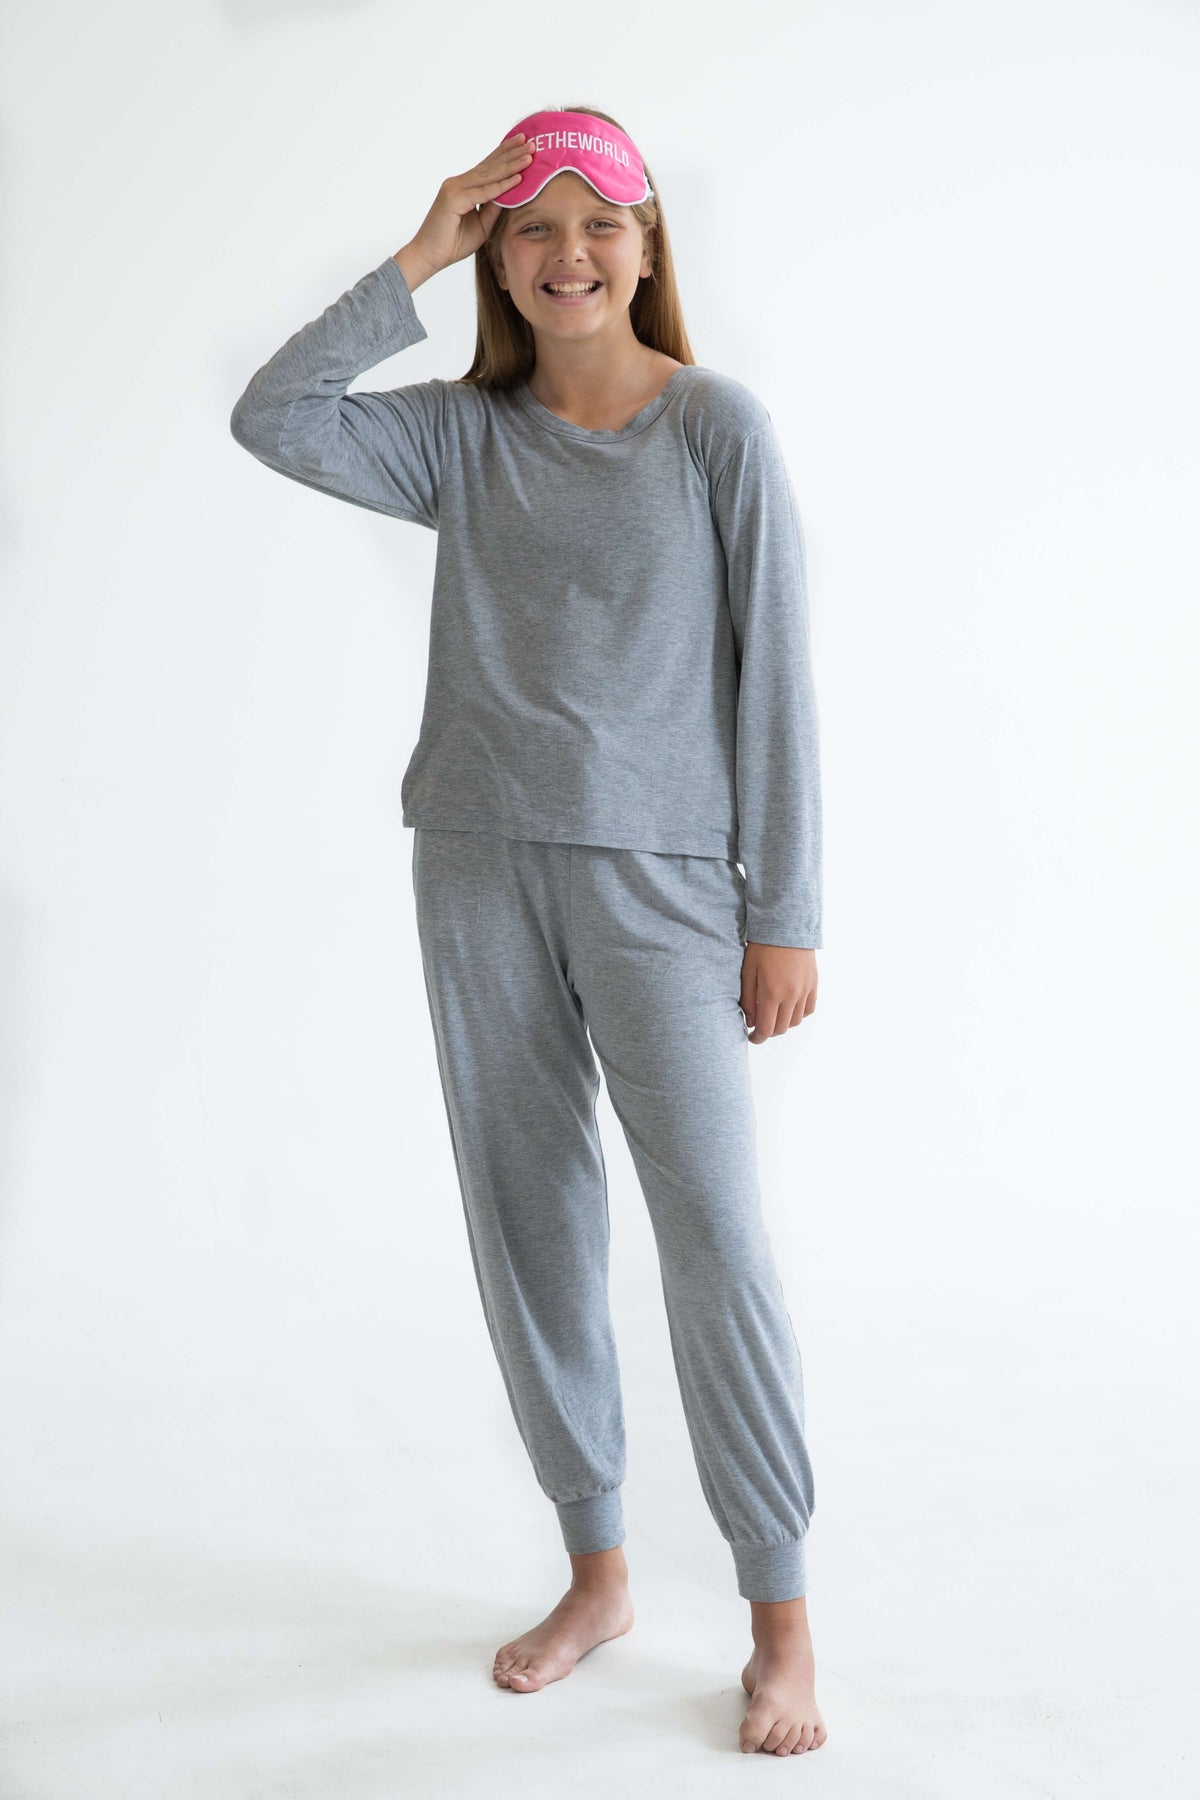 grey girls winter pyjamas set long pants and long sleeve top by Love Haidee Australia front